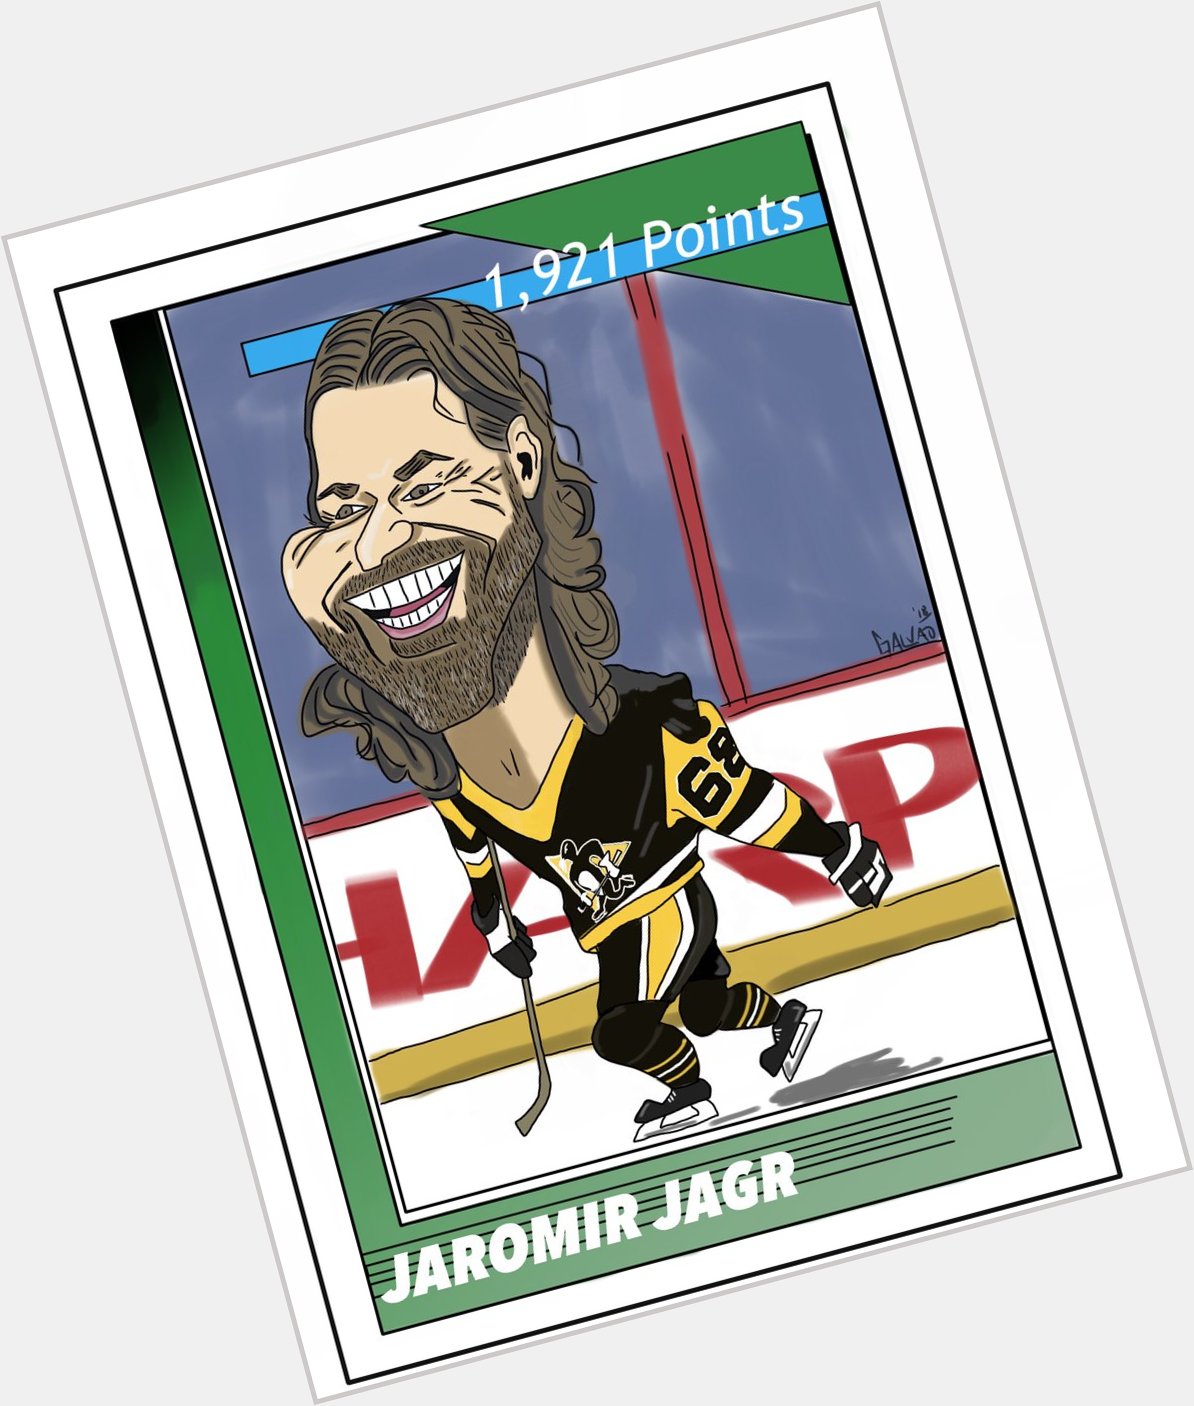 Happy birthday to Jaromir Jagr!
The big 5-0!    